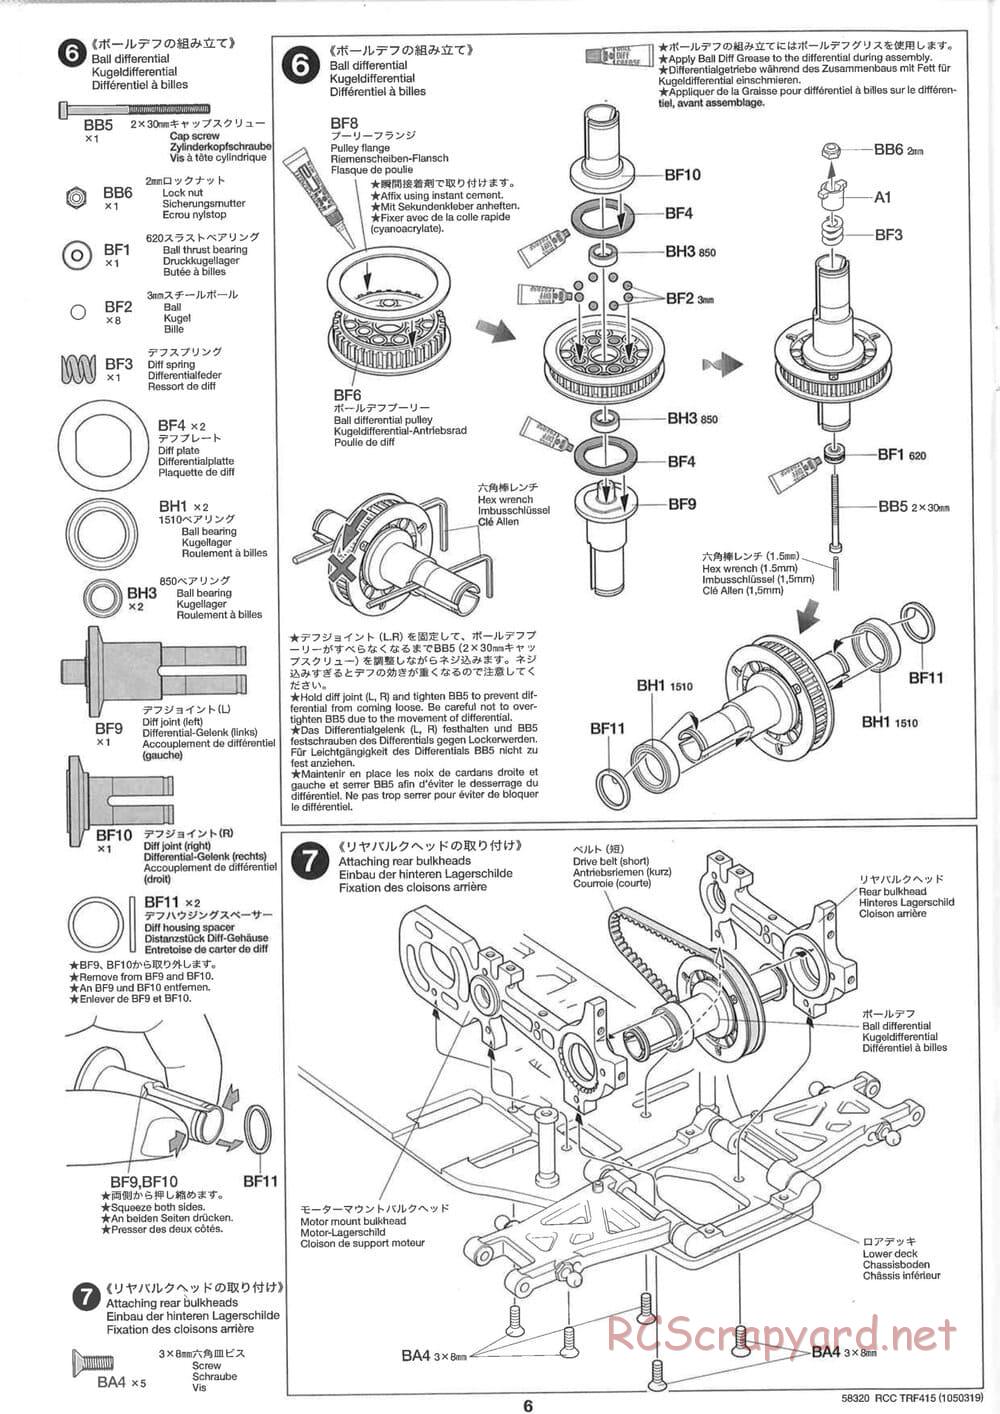 Tamiya - TRF415 Chassis - Manual - Page 6